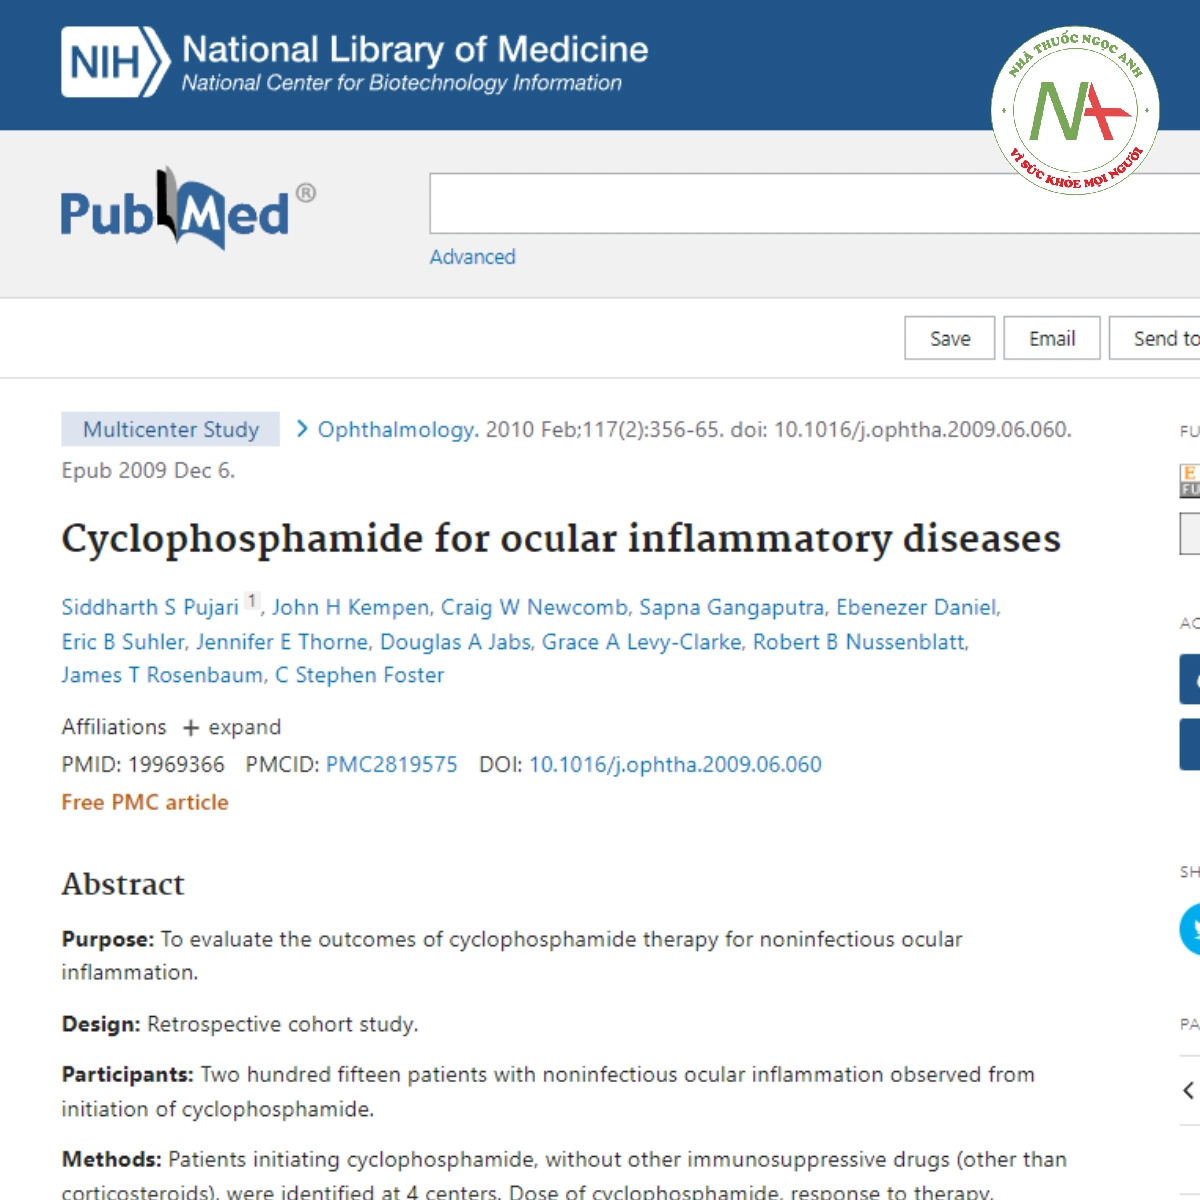 Cyclophosphamide for ocular inflammatory diseases